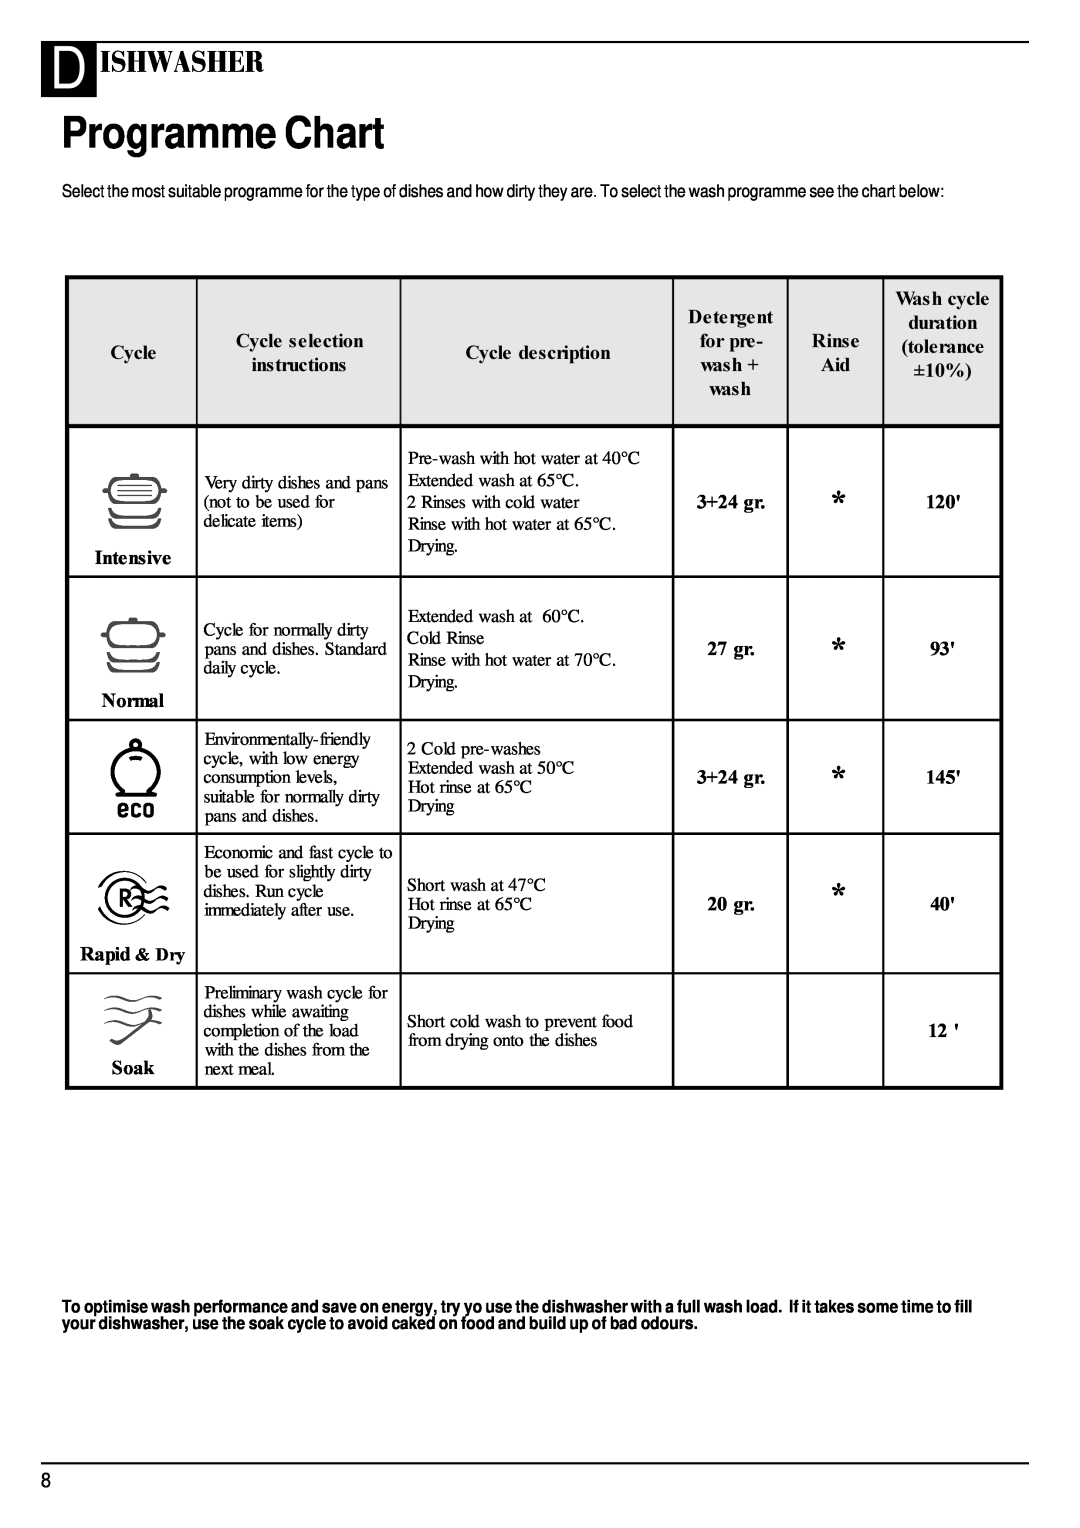 Hotpoint BCI450 manual Programme Chart, D Ishwasher, 5LQVH 